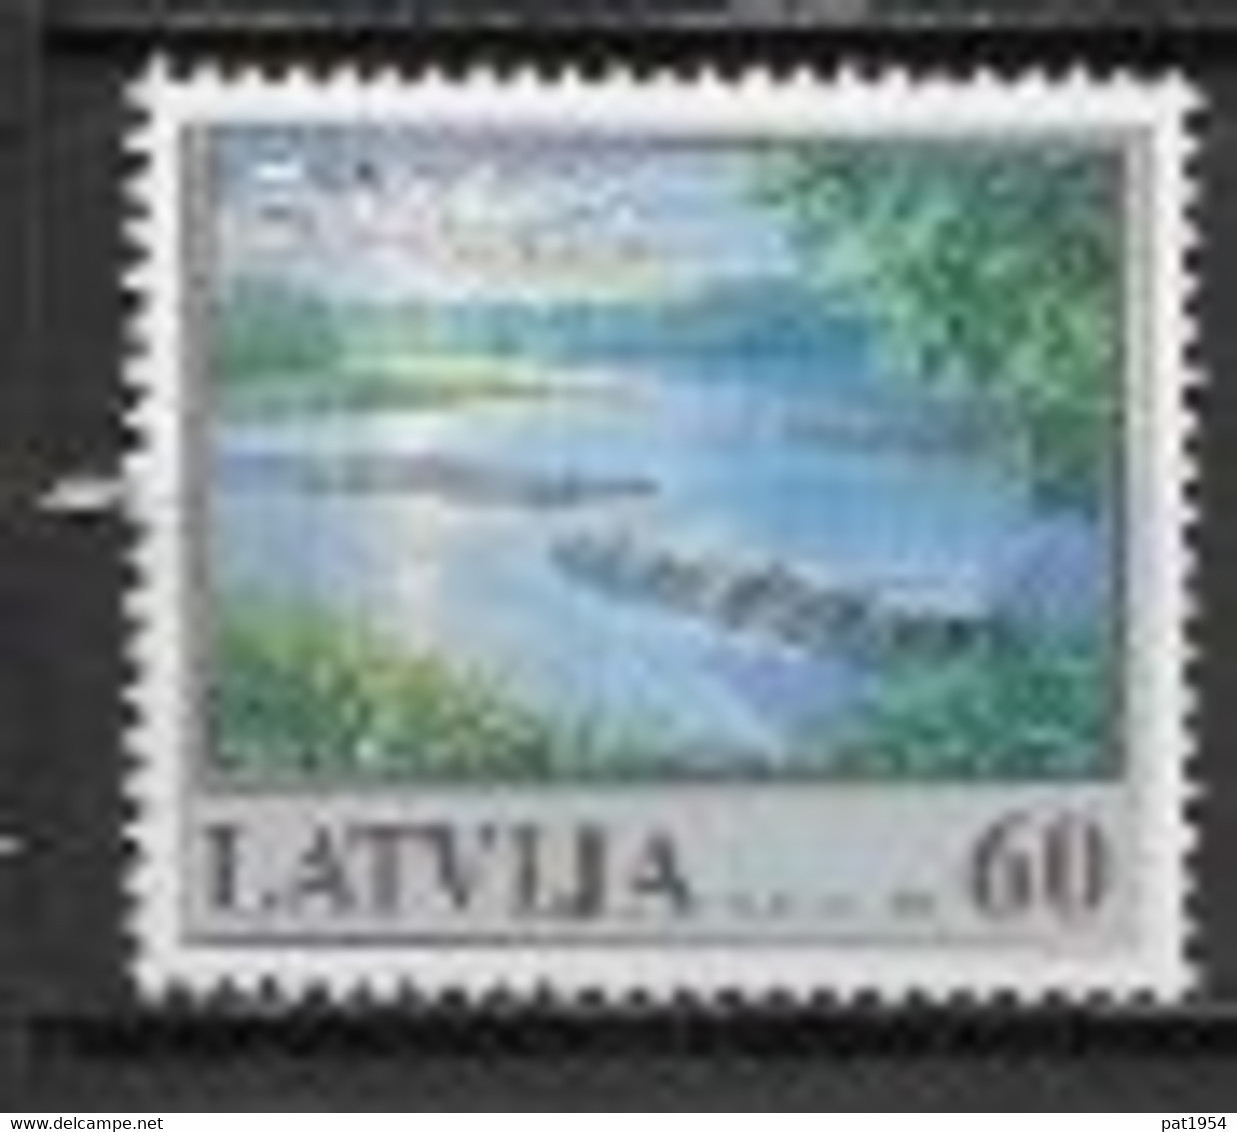 Lettonie 2001 N° 514 Neufs Europa L'eau - 2001